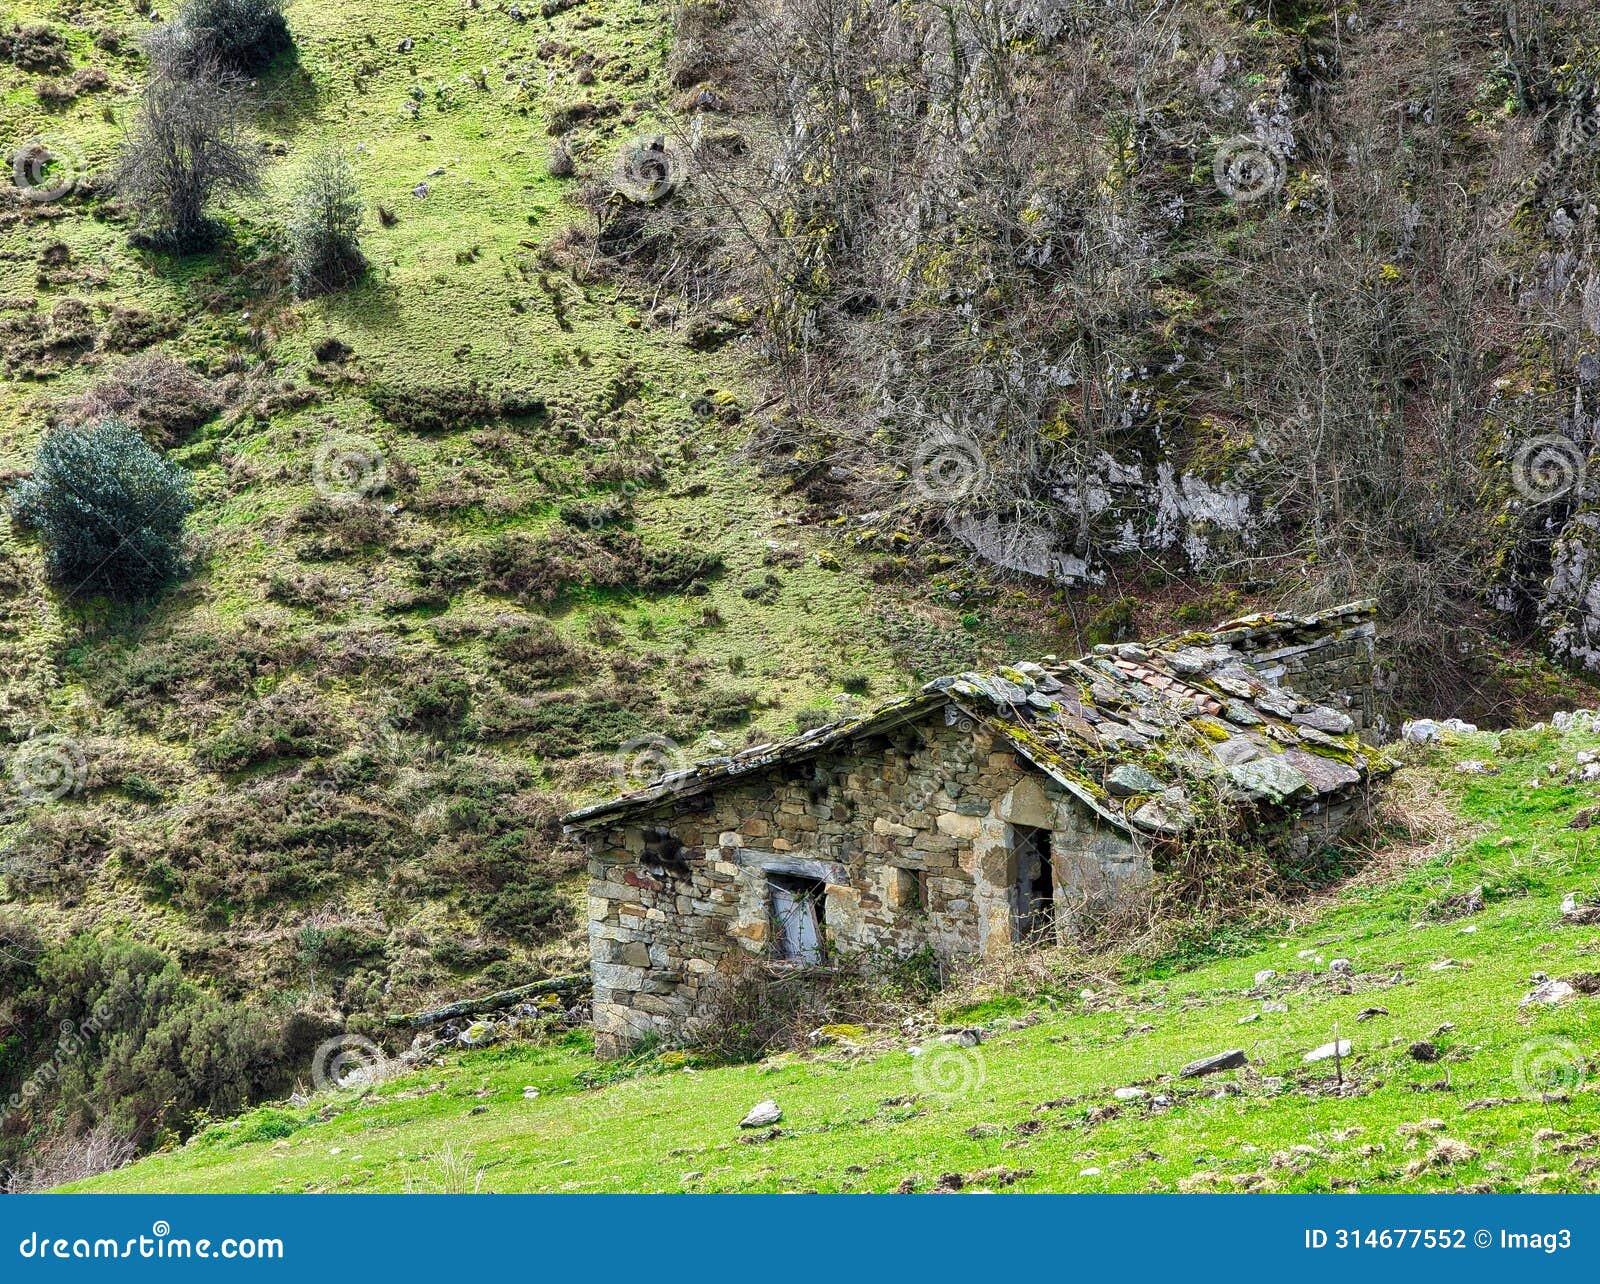 typical hut near nieves village, caso municipality, redes natural park, asturias, spain